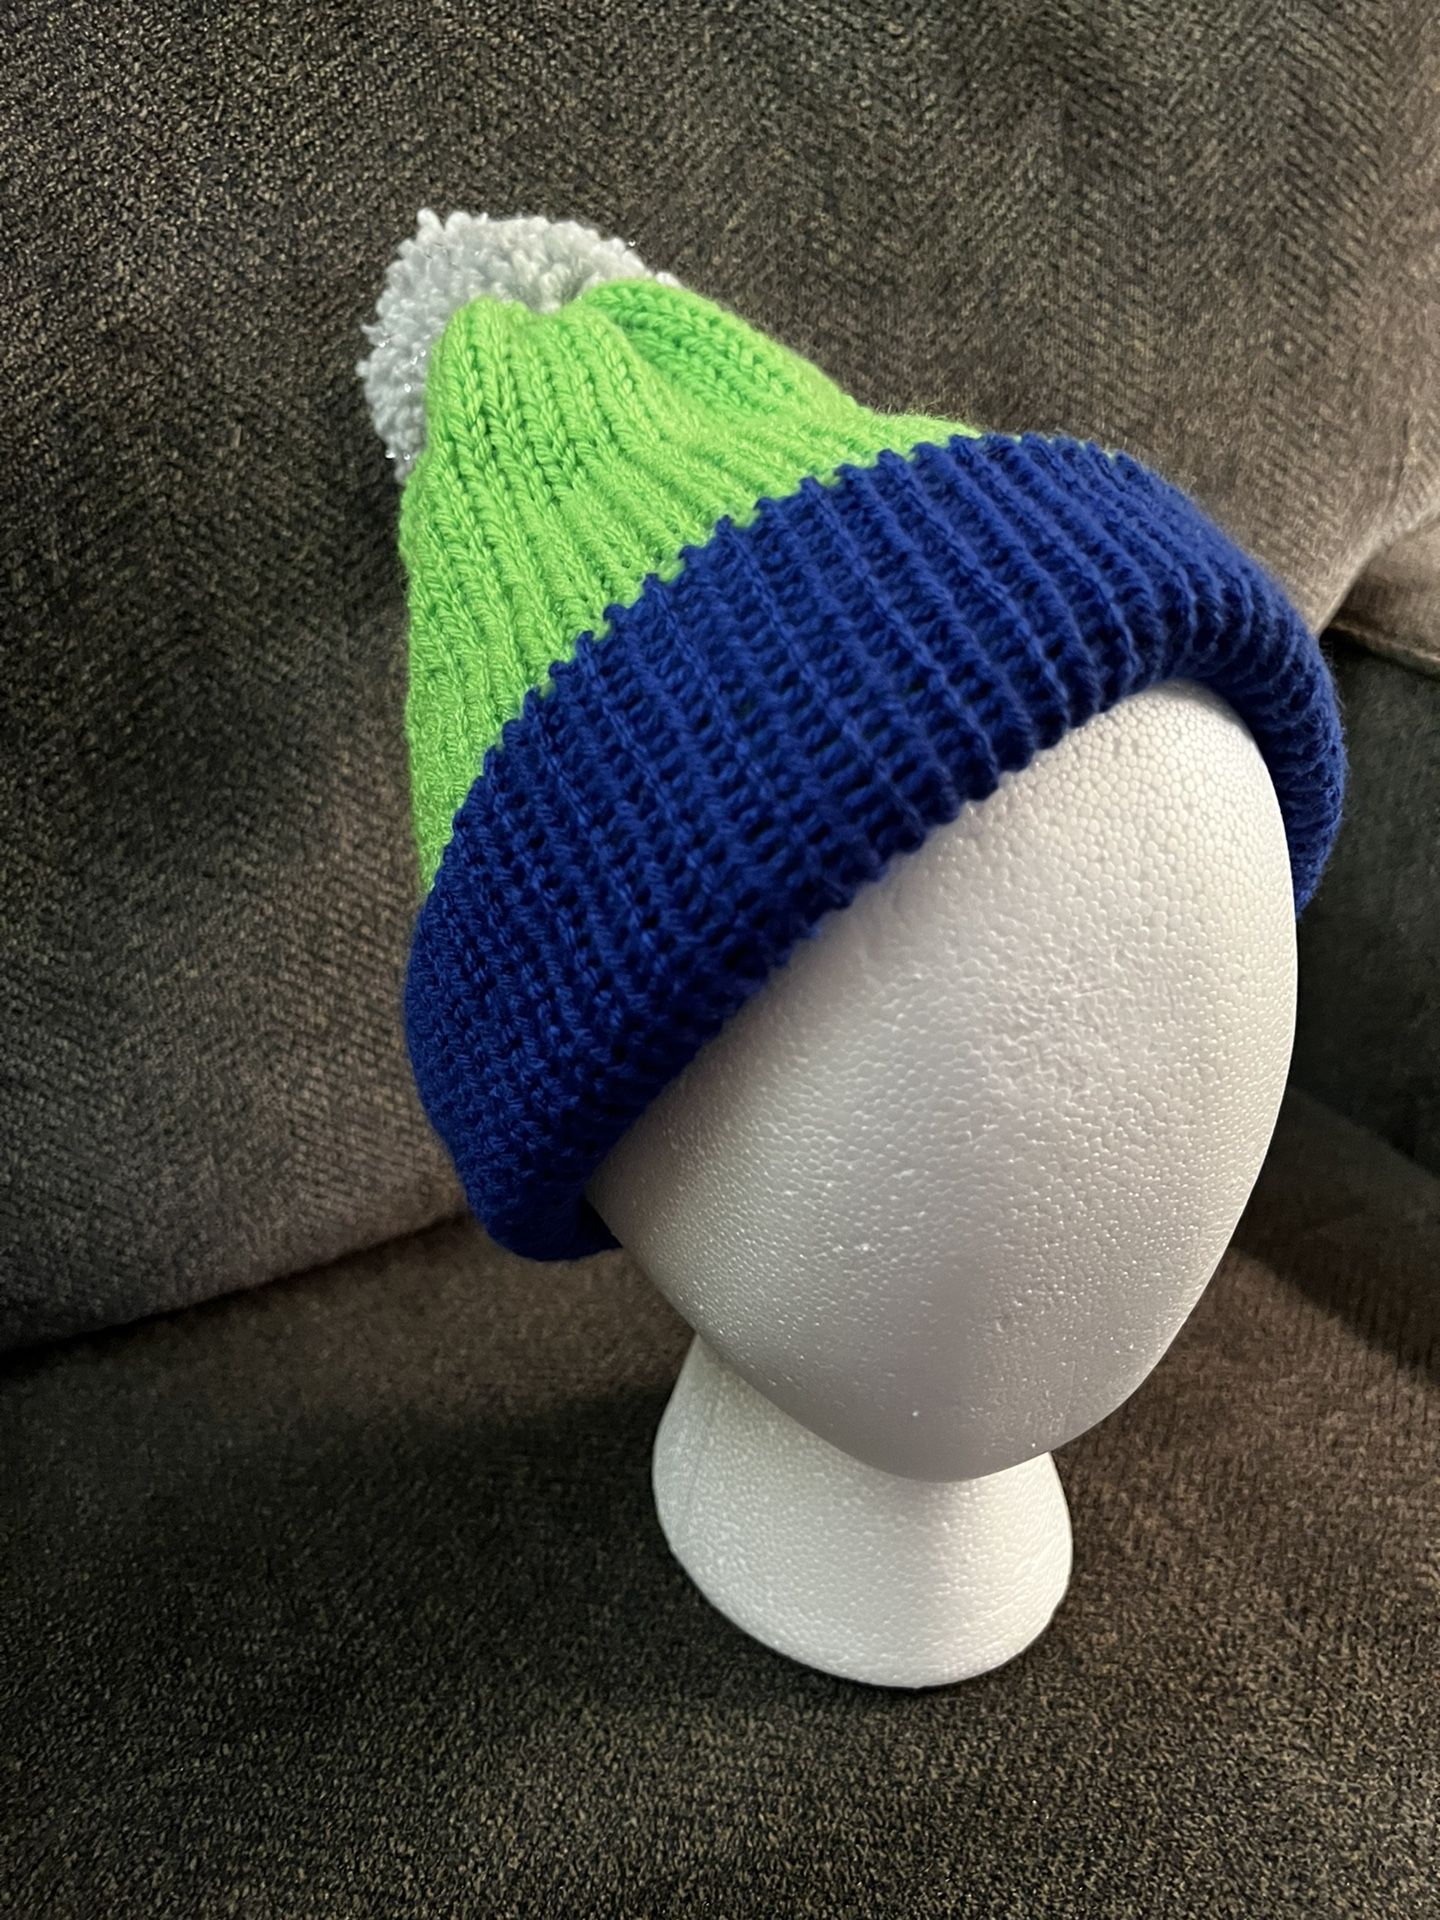 Seattle Sonics / Supersonics Knit Pom Beanie Hat for Sale in Kent, WA -  OfferUp